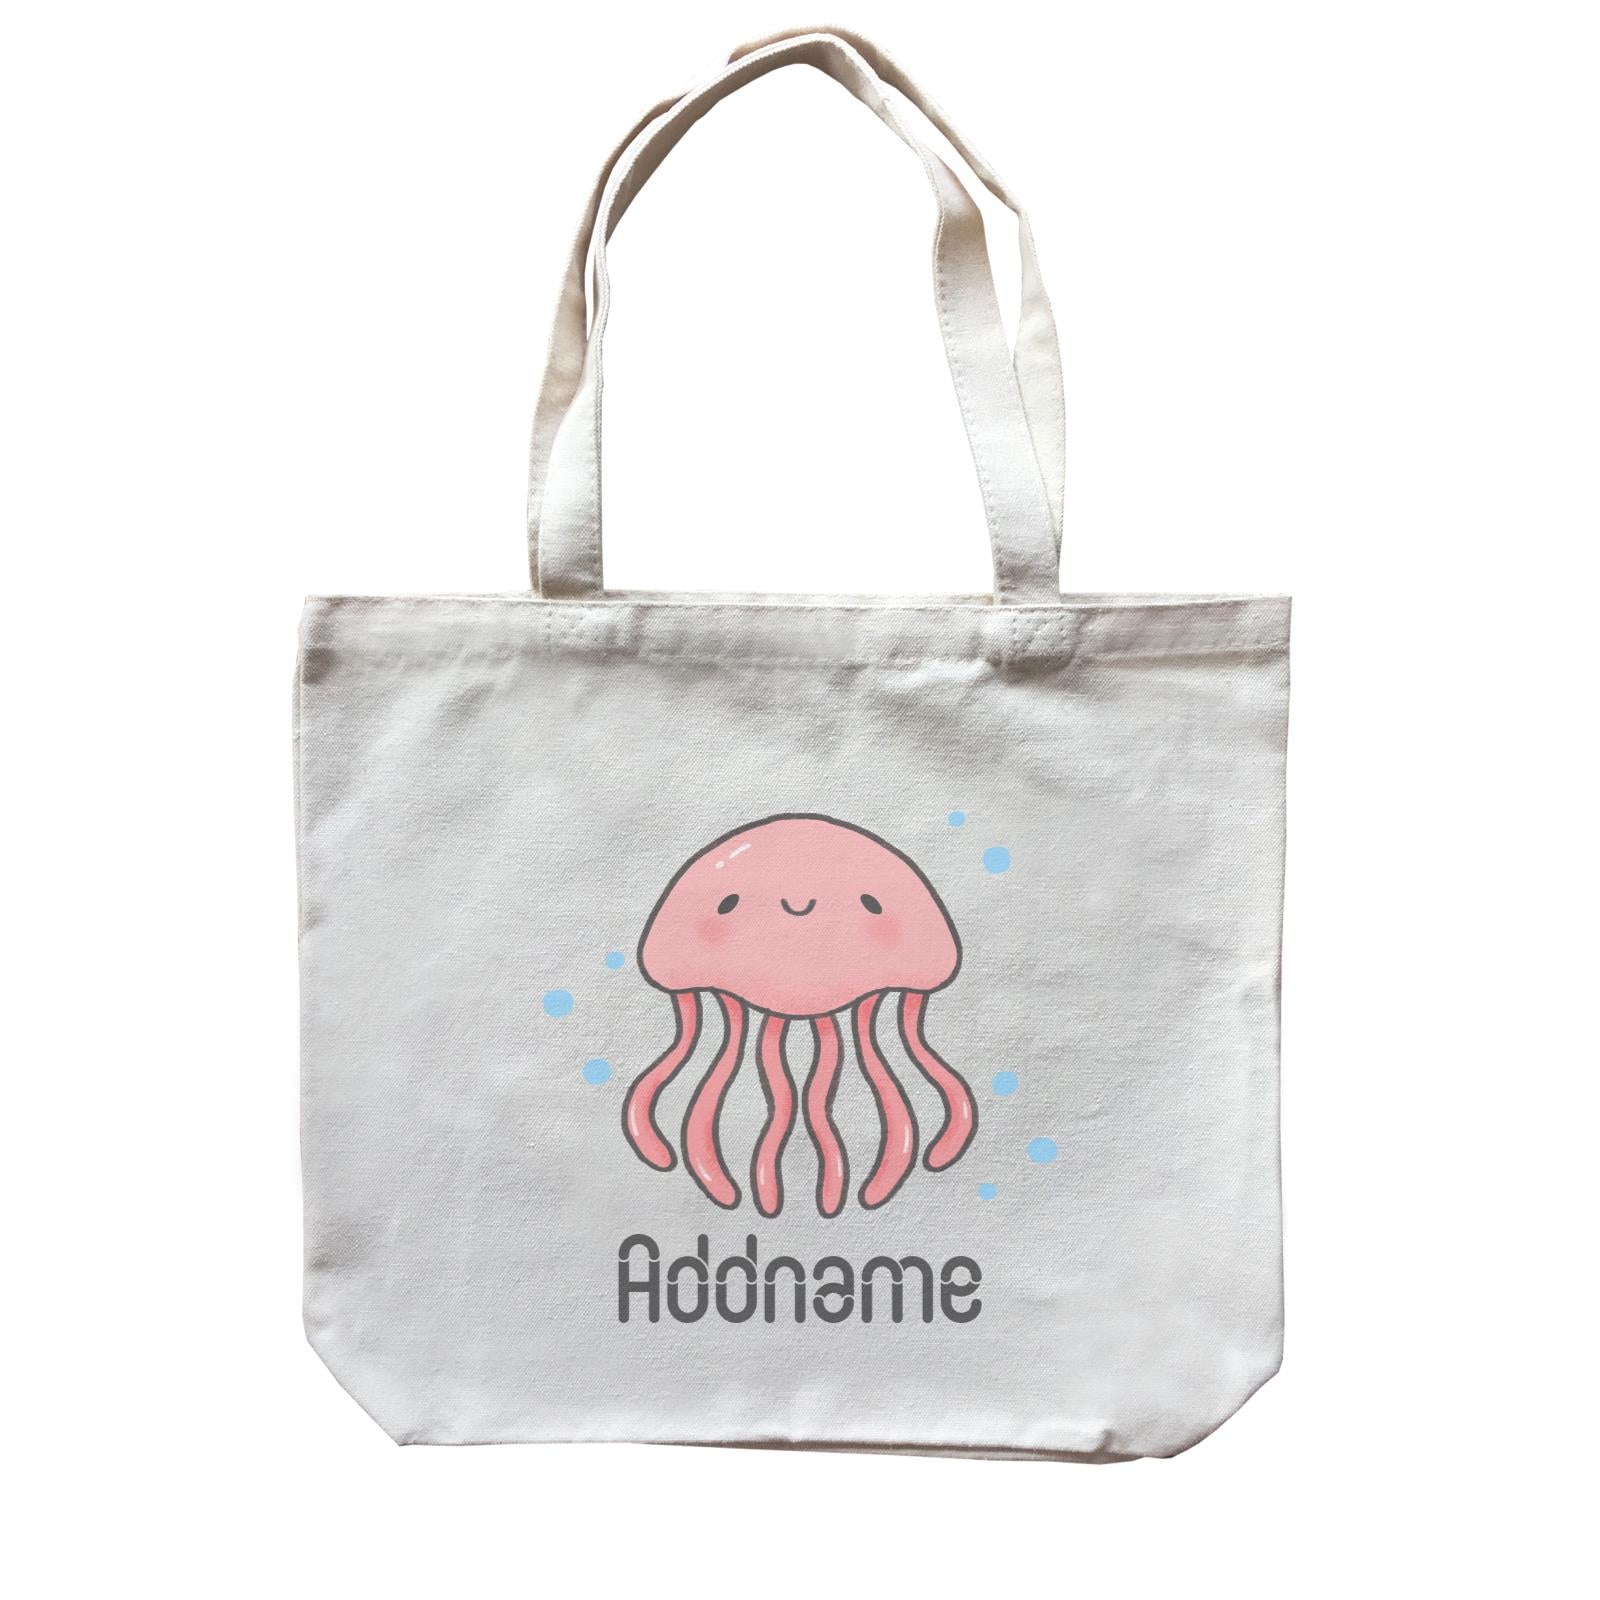 Cute Hand Drawn Style Jellyfish Addname Canvas Bag